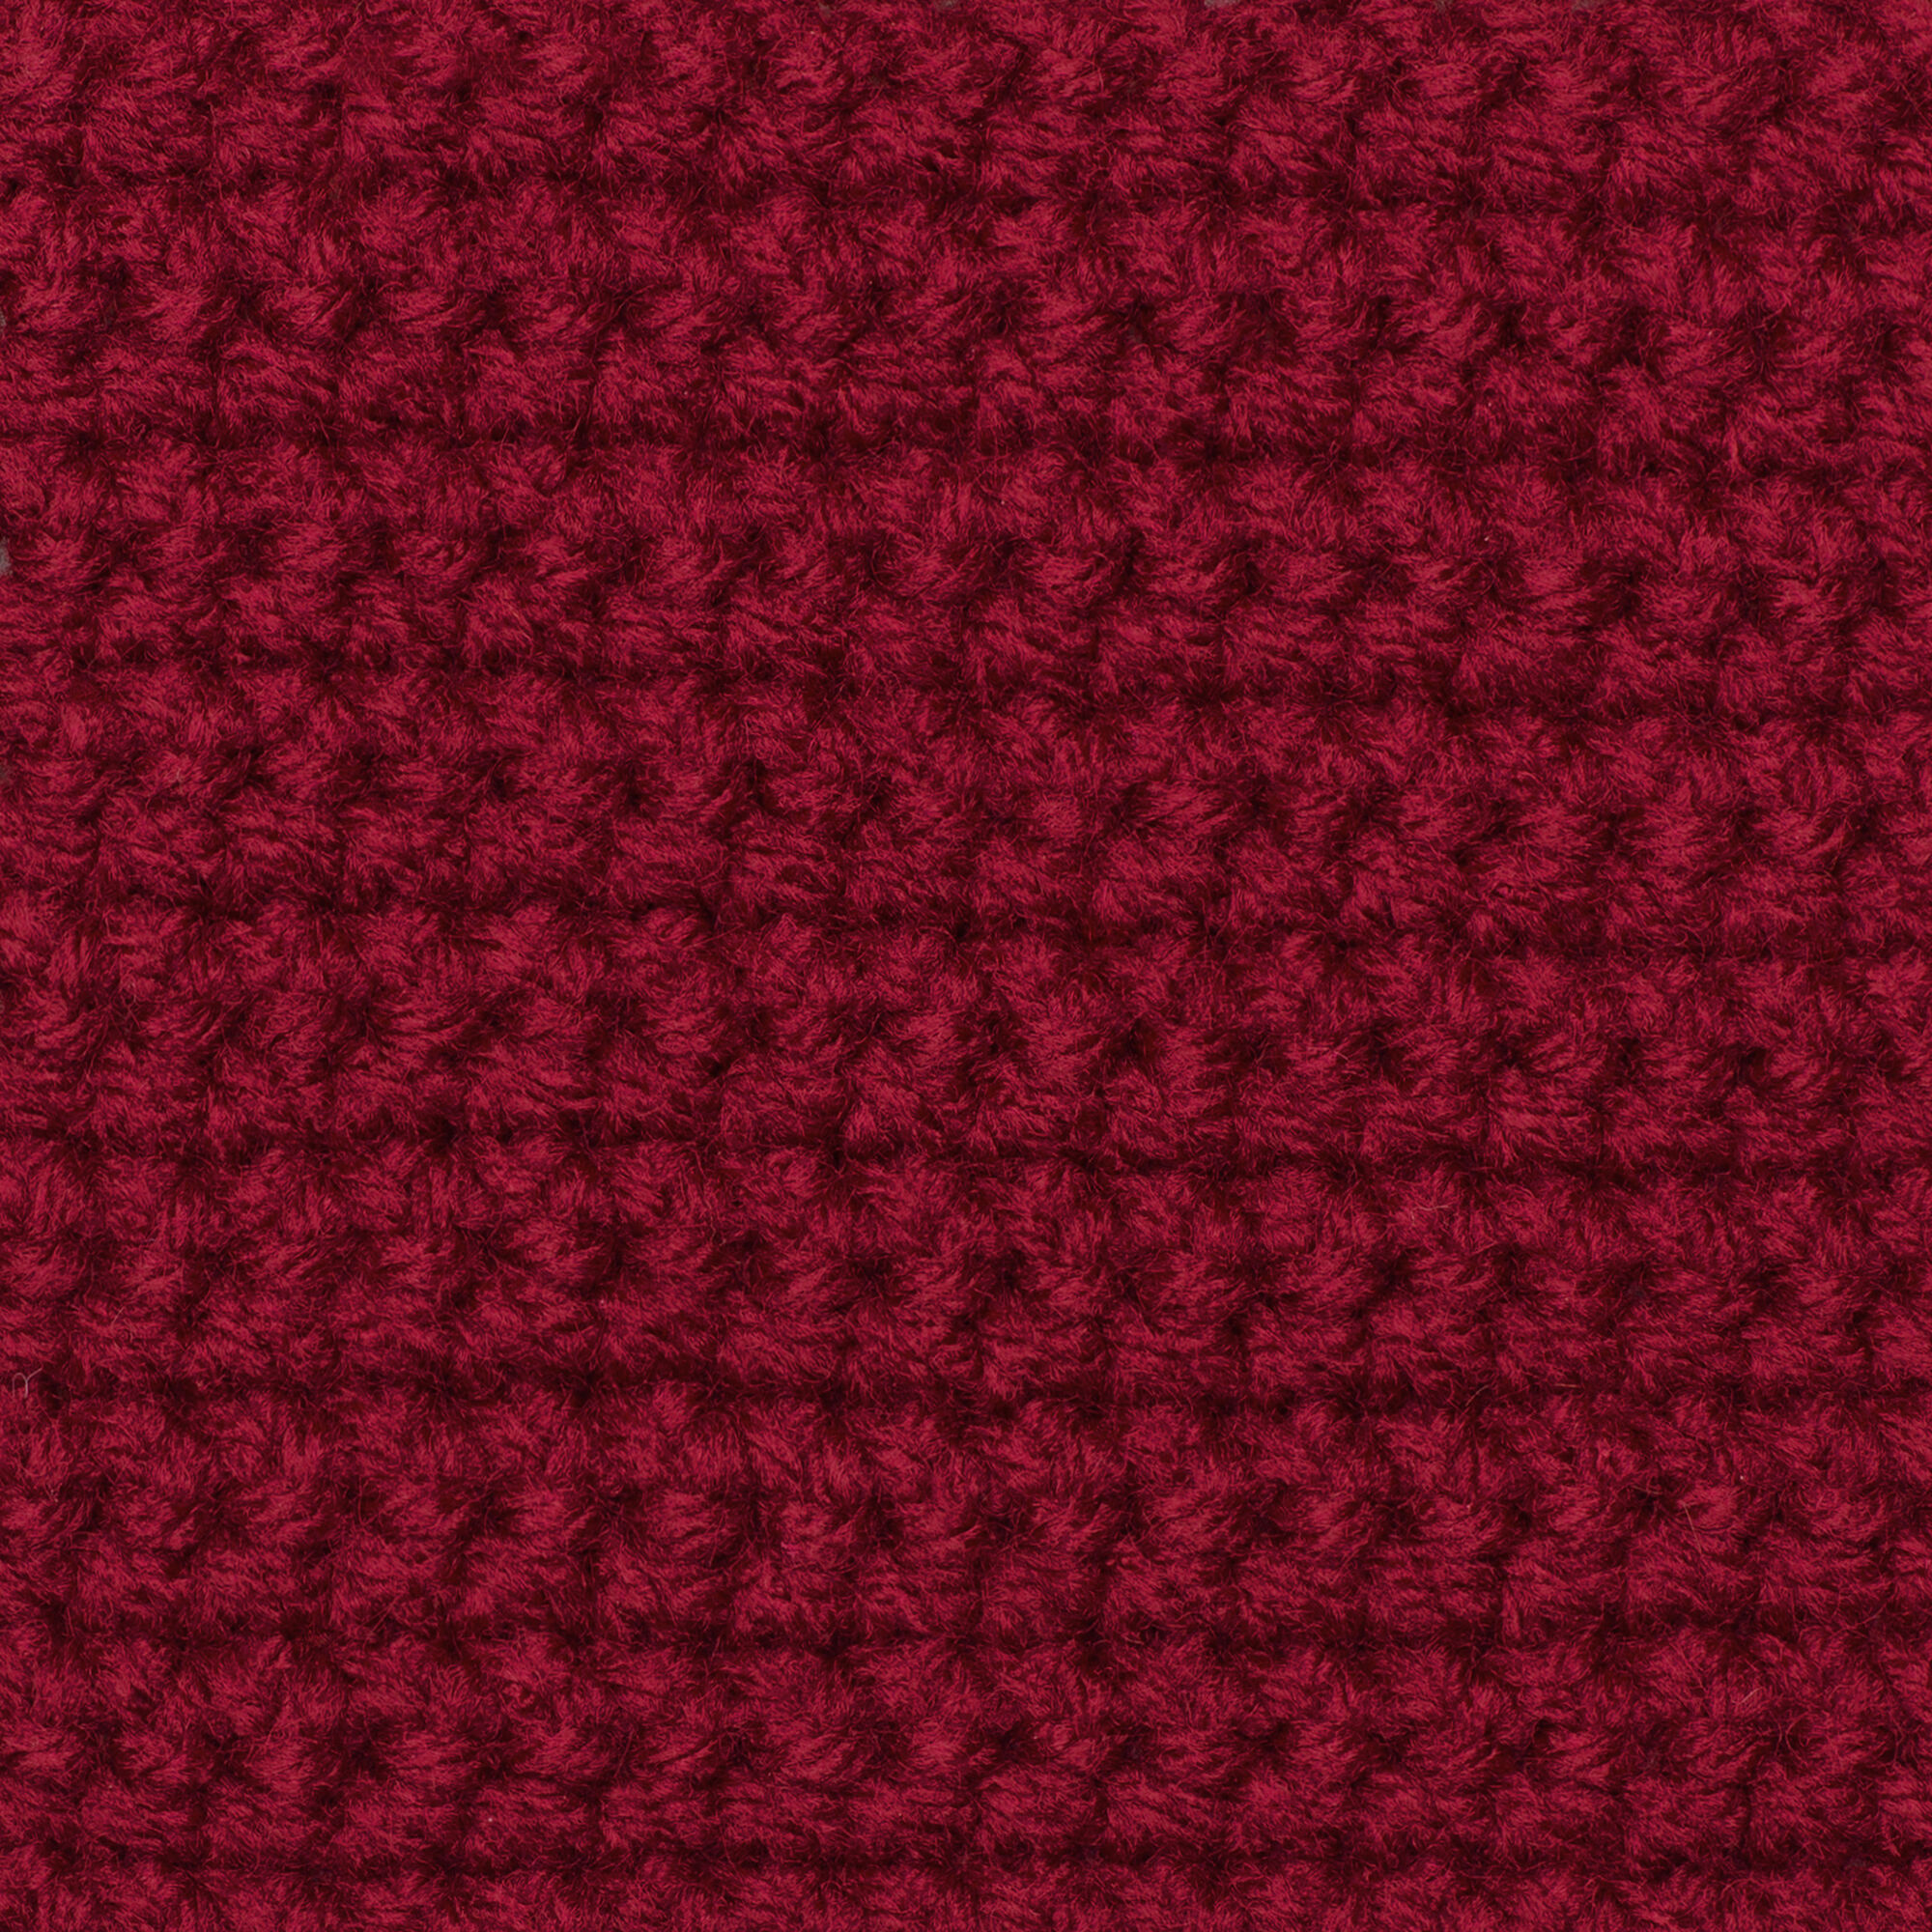 Red Heart Super Saver Medium Acrylic Burgundy Yarn, 364 yd - image 3 of 18